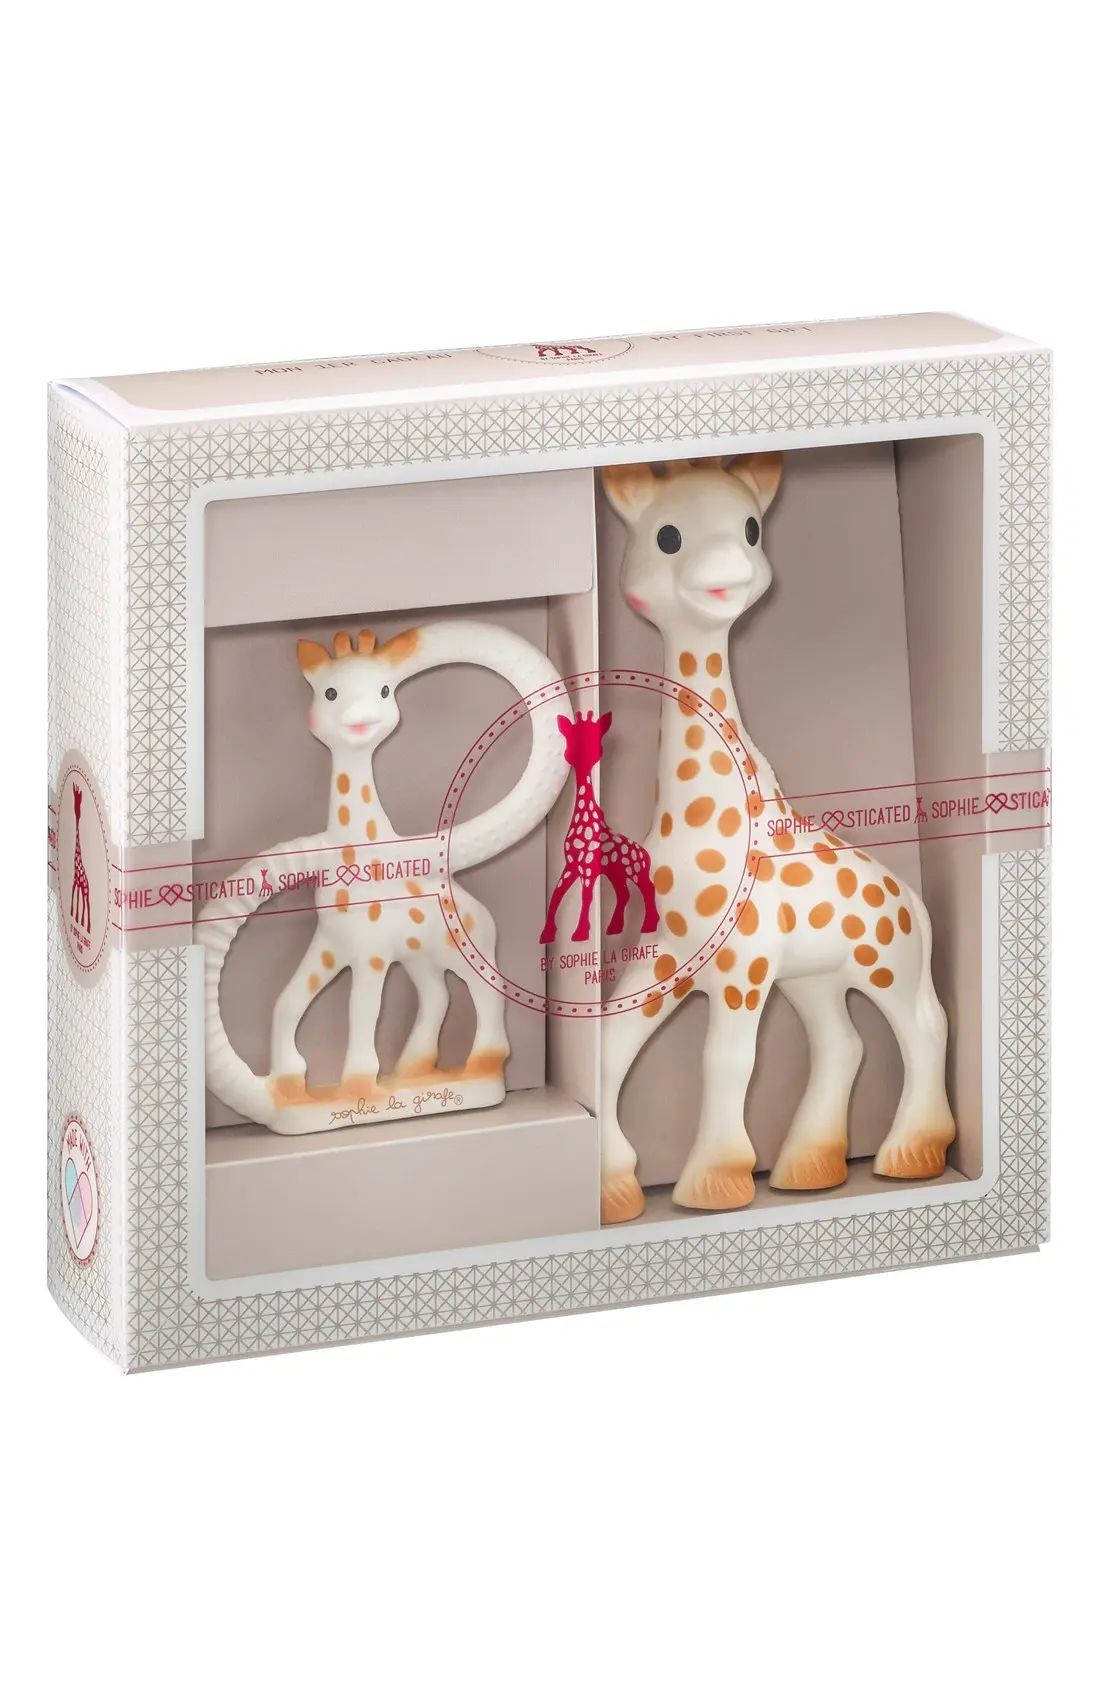 Sophie la Girafe 'Sophiesticated' Ring Teether & Teething Toy in Cream at Nordstrom | Nordstrom